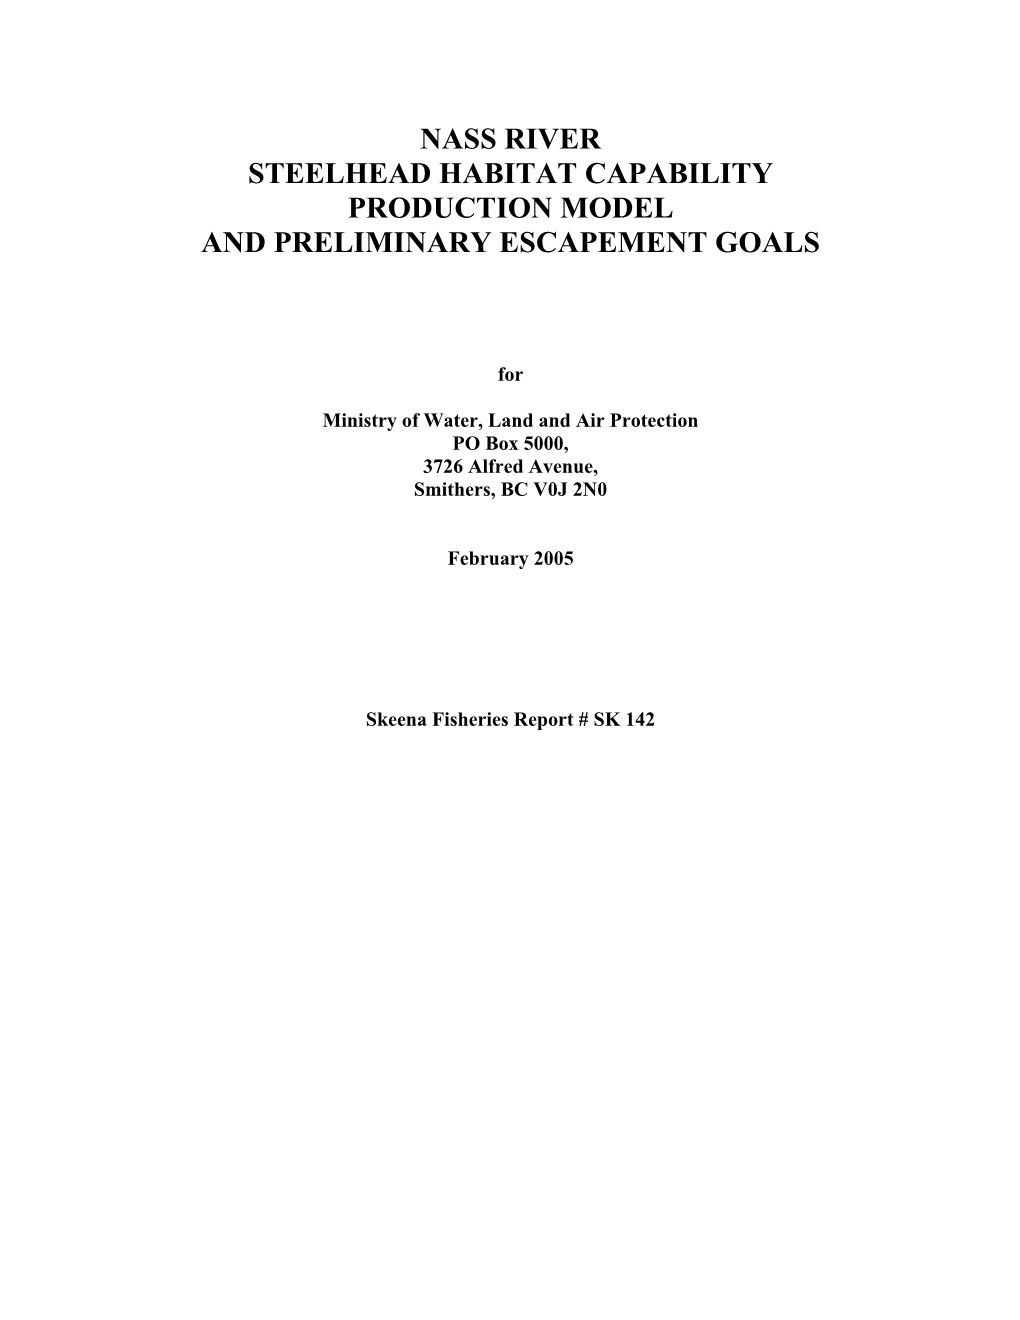 Nass River Steelhead Habitat Capability Production Model and Preliminary Escapement Goals